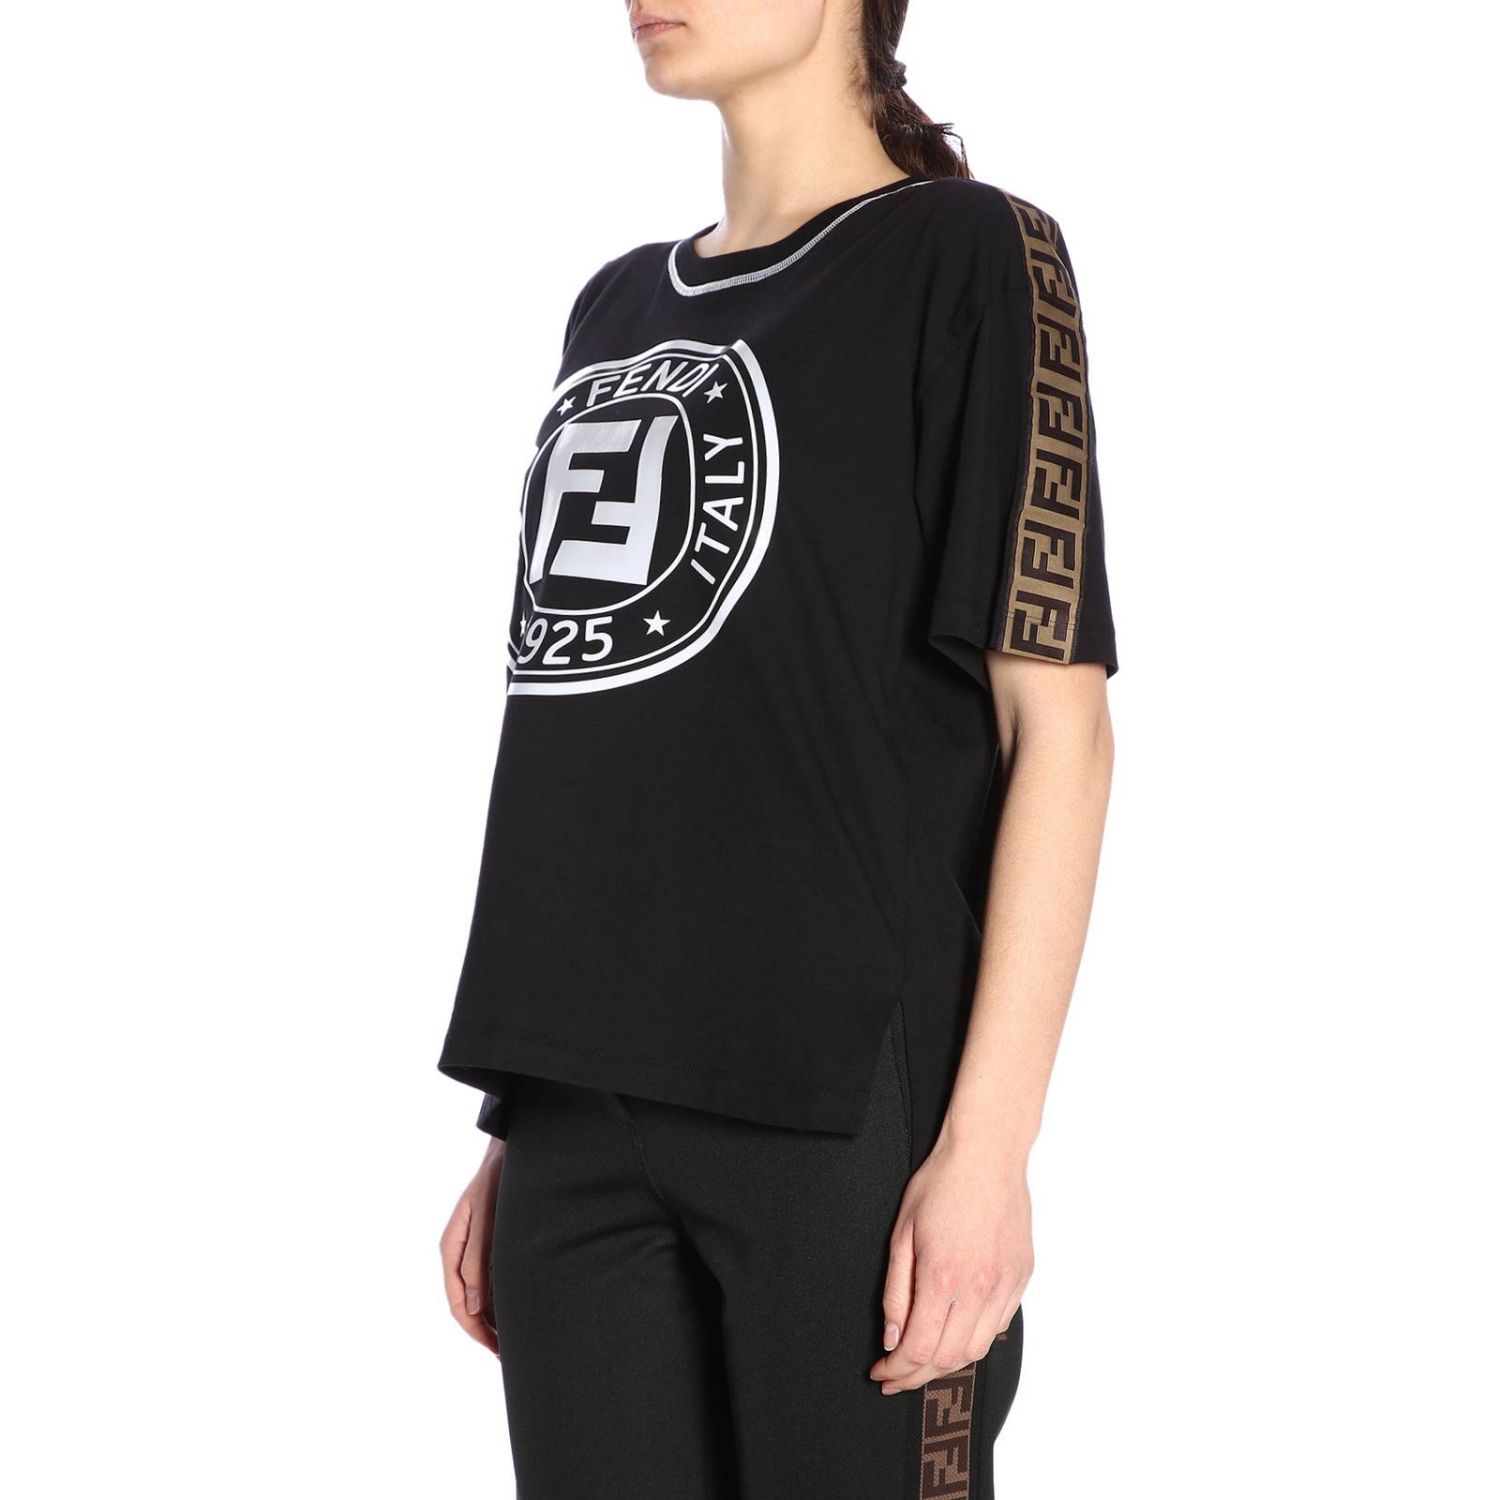 FENDI: T-shirt women | T-Shirt Fendi Women Black | T-Shirt Fendi FAF073 ...